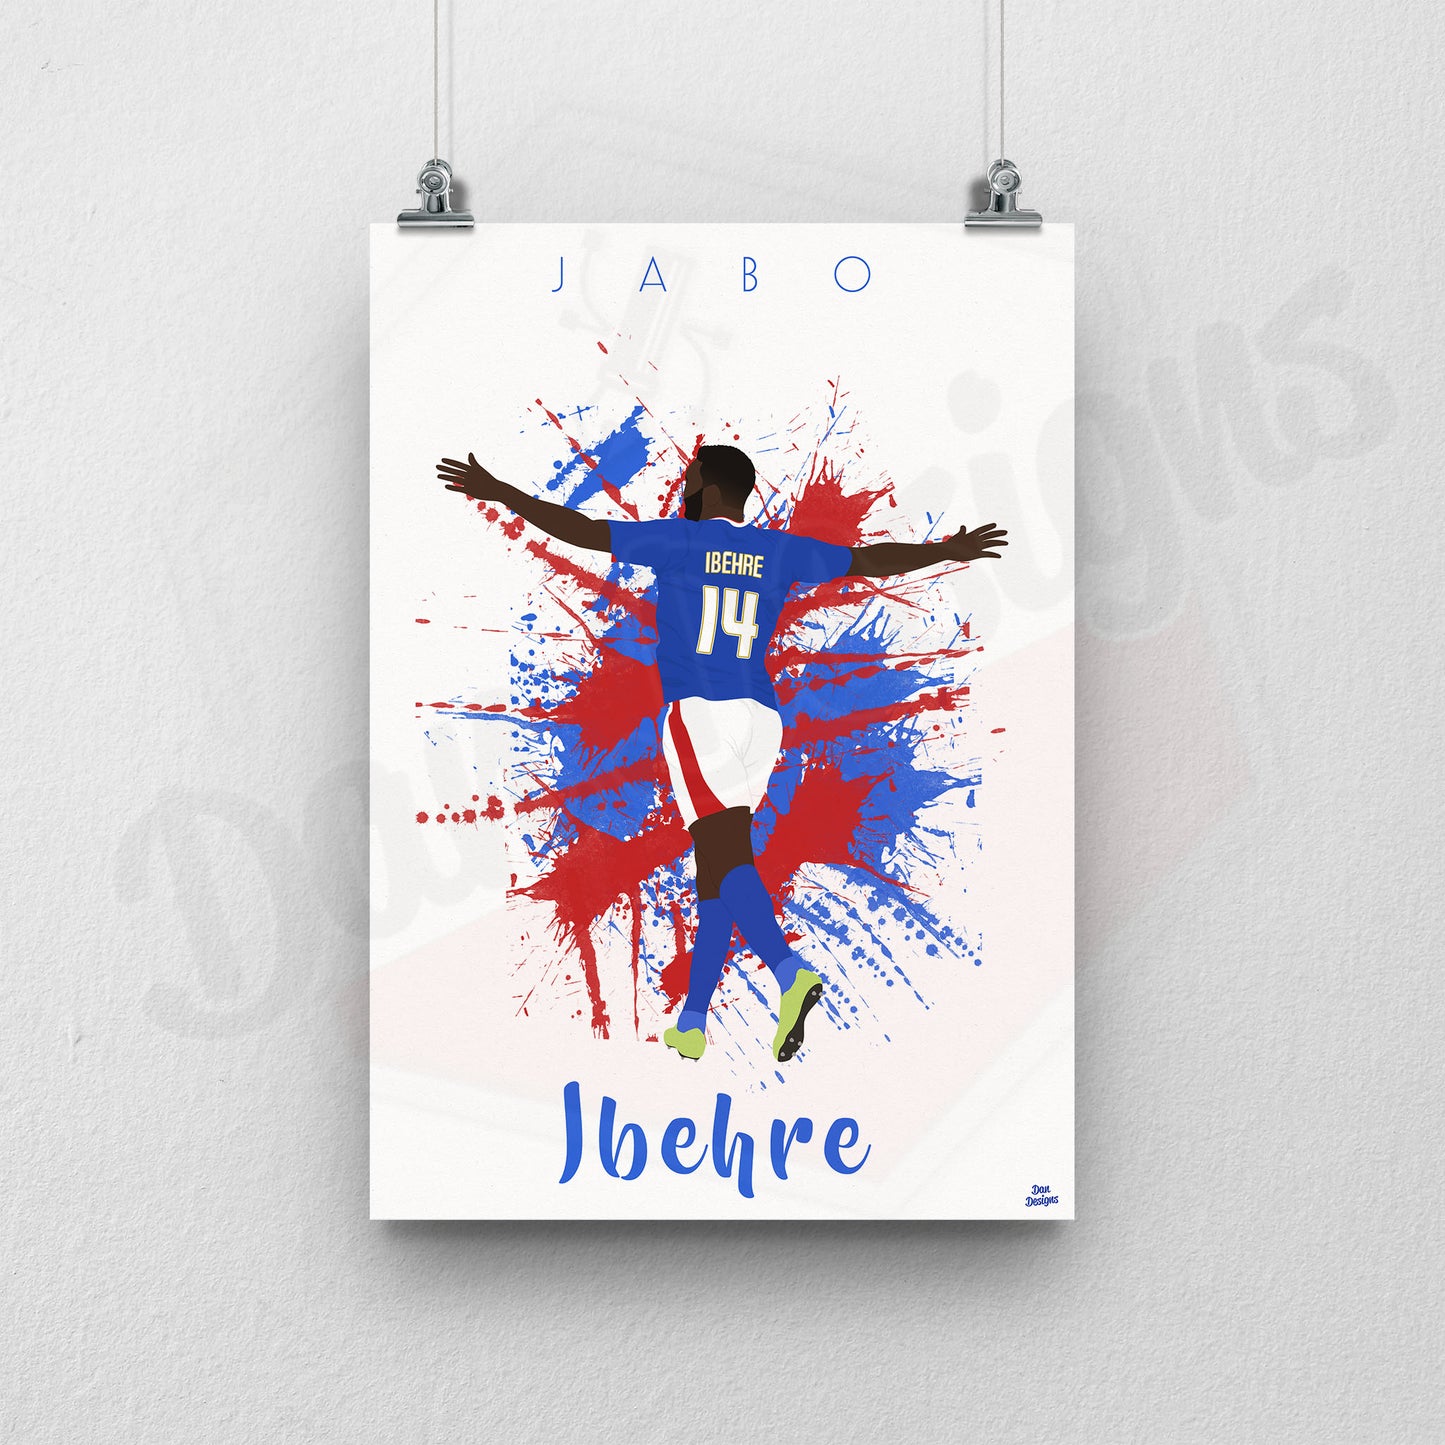 Jabo Ibehre Print